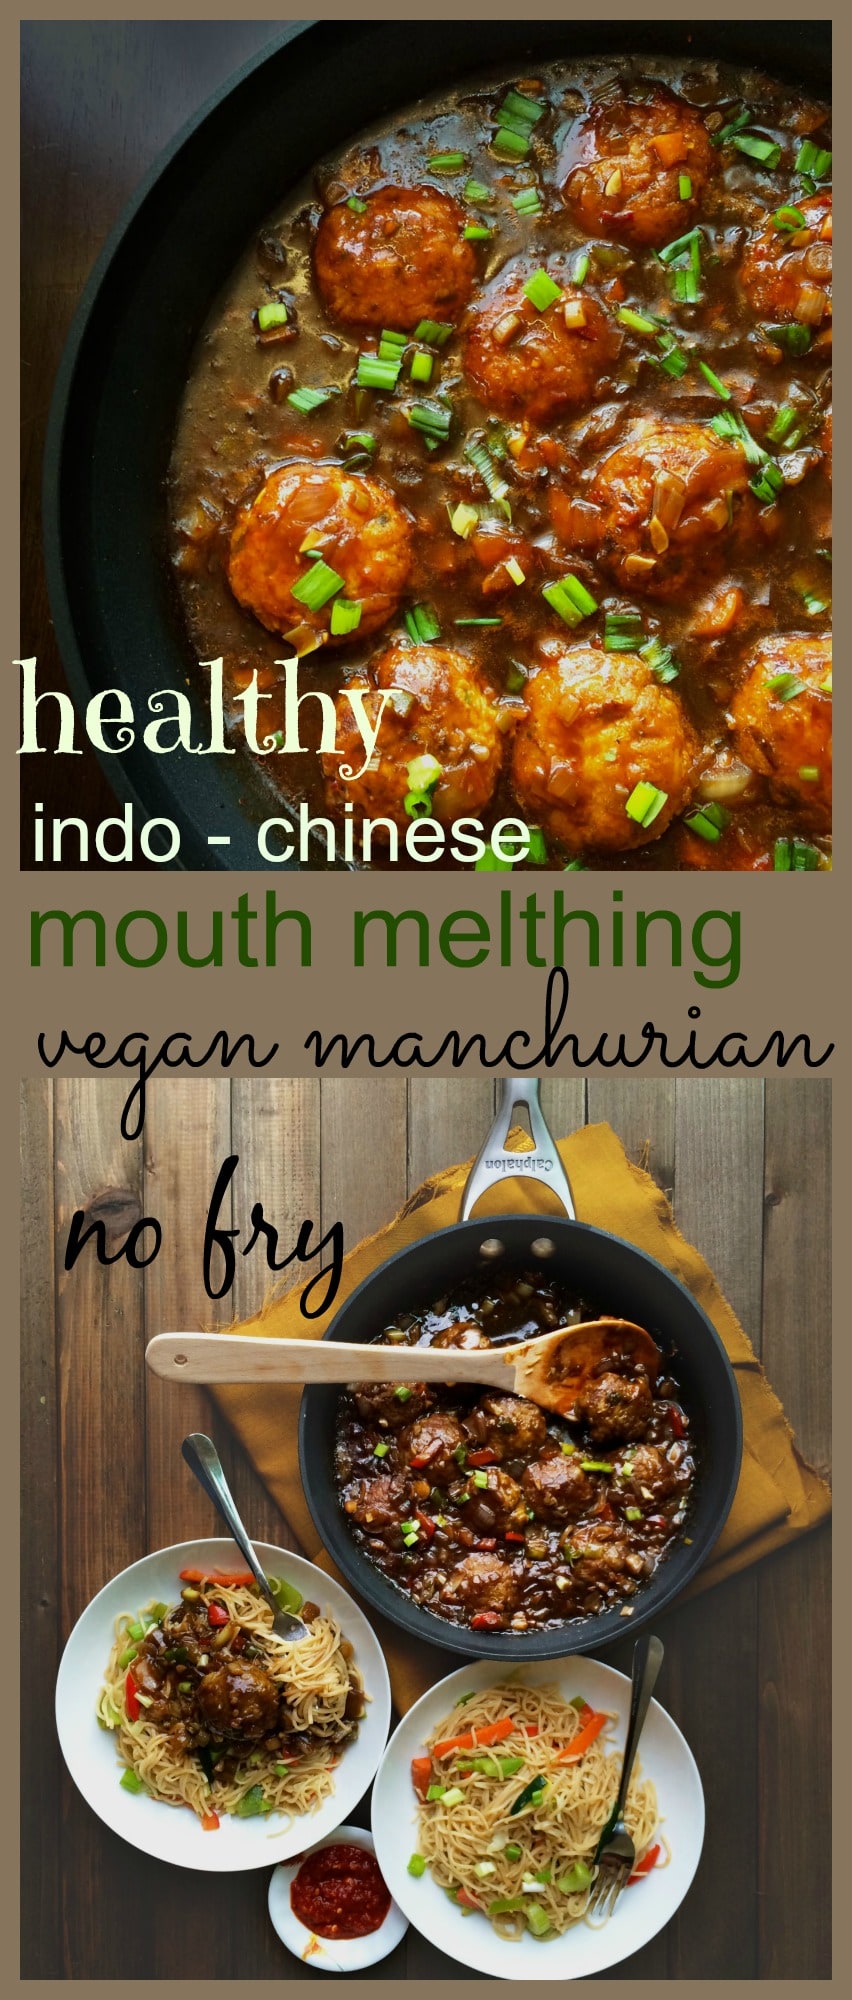 vegan healthy veg manchurian -no fry